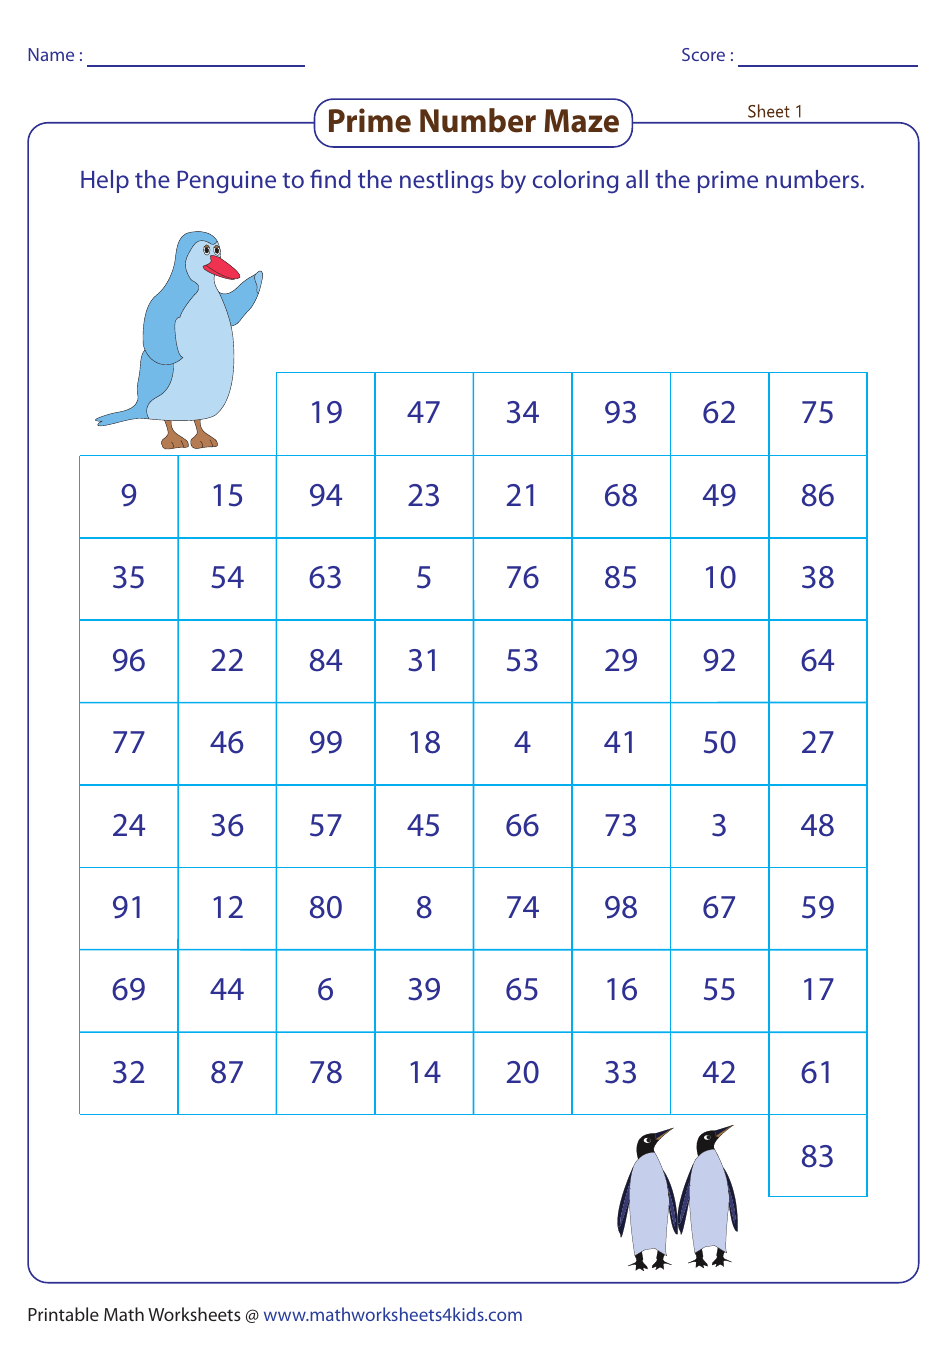 Prime Number Maze Worksheet With Answer Key Download Printable PDF